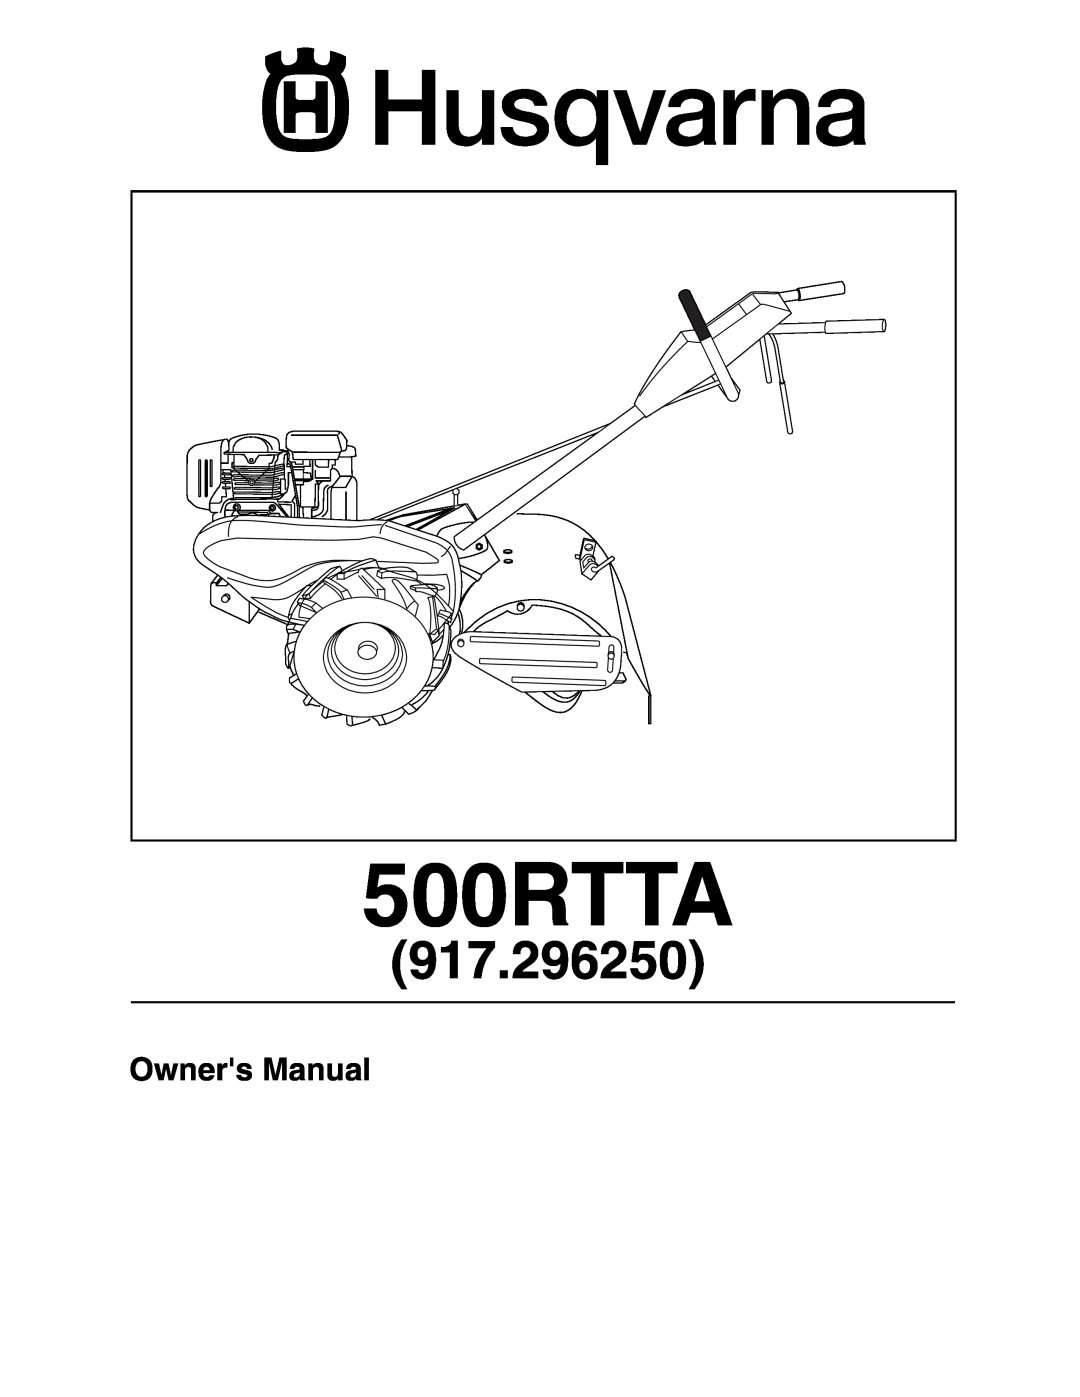 Husqvarna 500RTTA owner manual 917.296250 